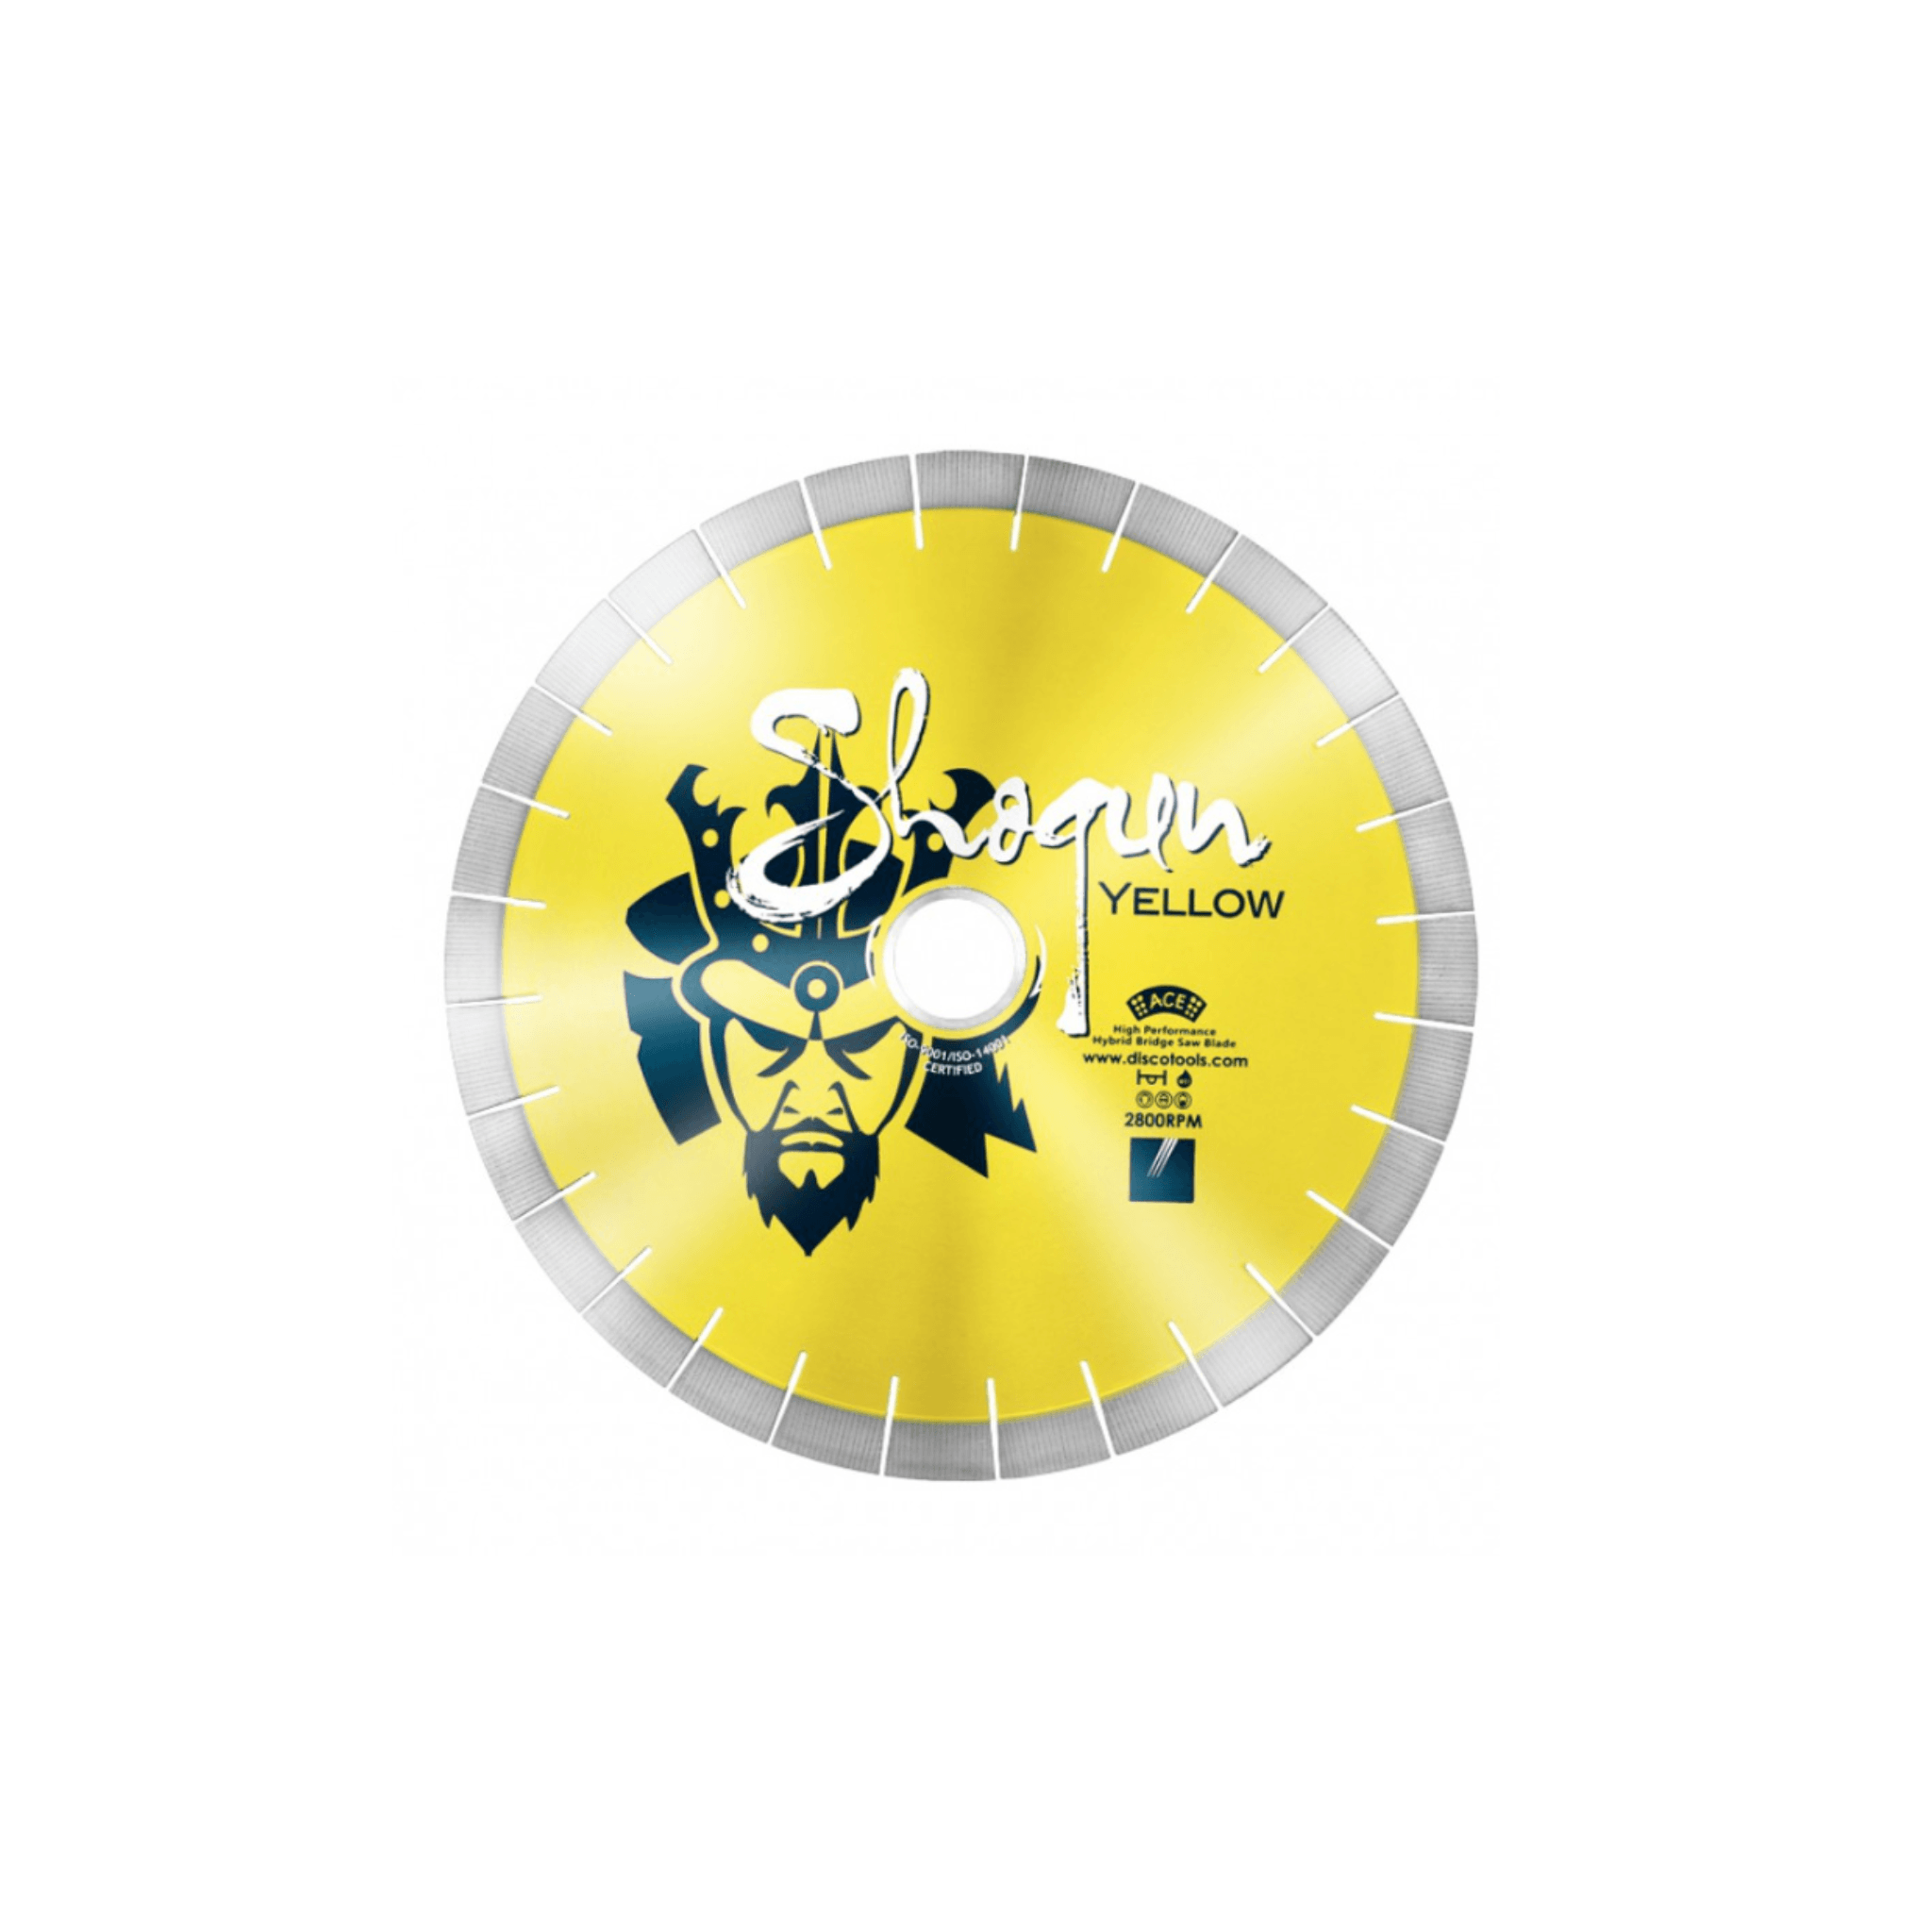 Disco Shogun Yellow 16" Blade - Direct Stone Tool Supply, Inc